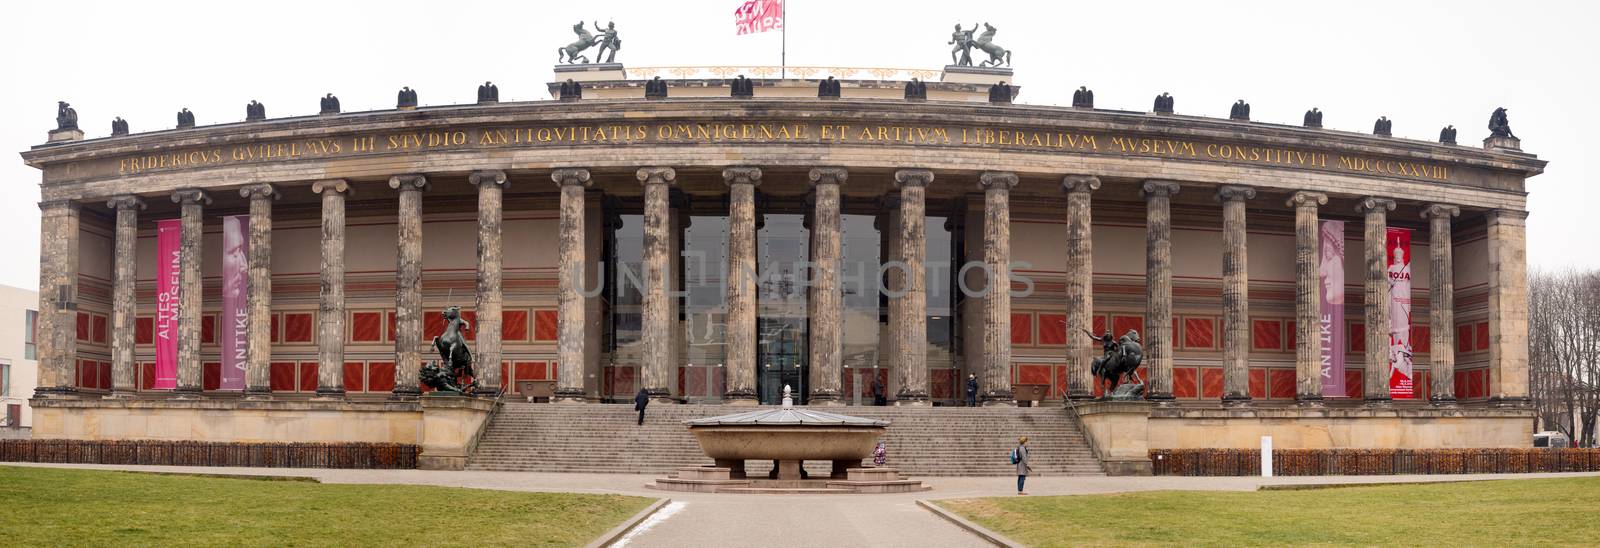 The Alte Nationalgalerie, Berlin by smoxx